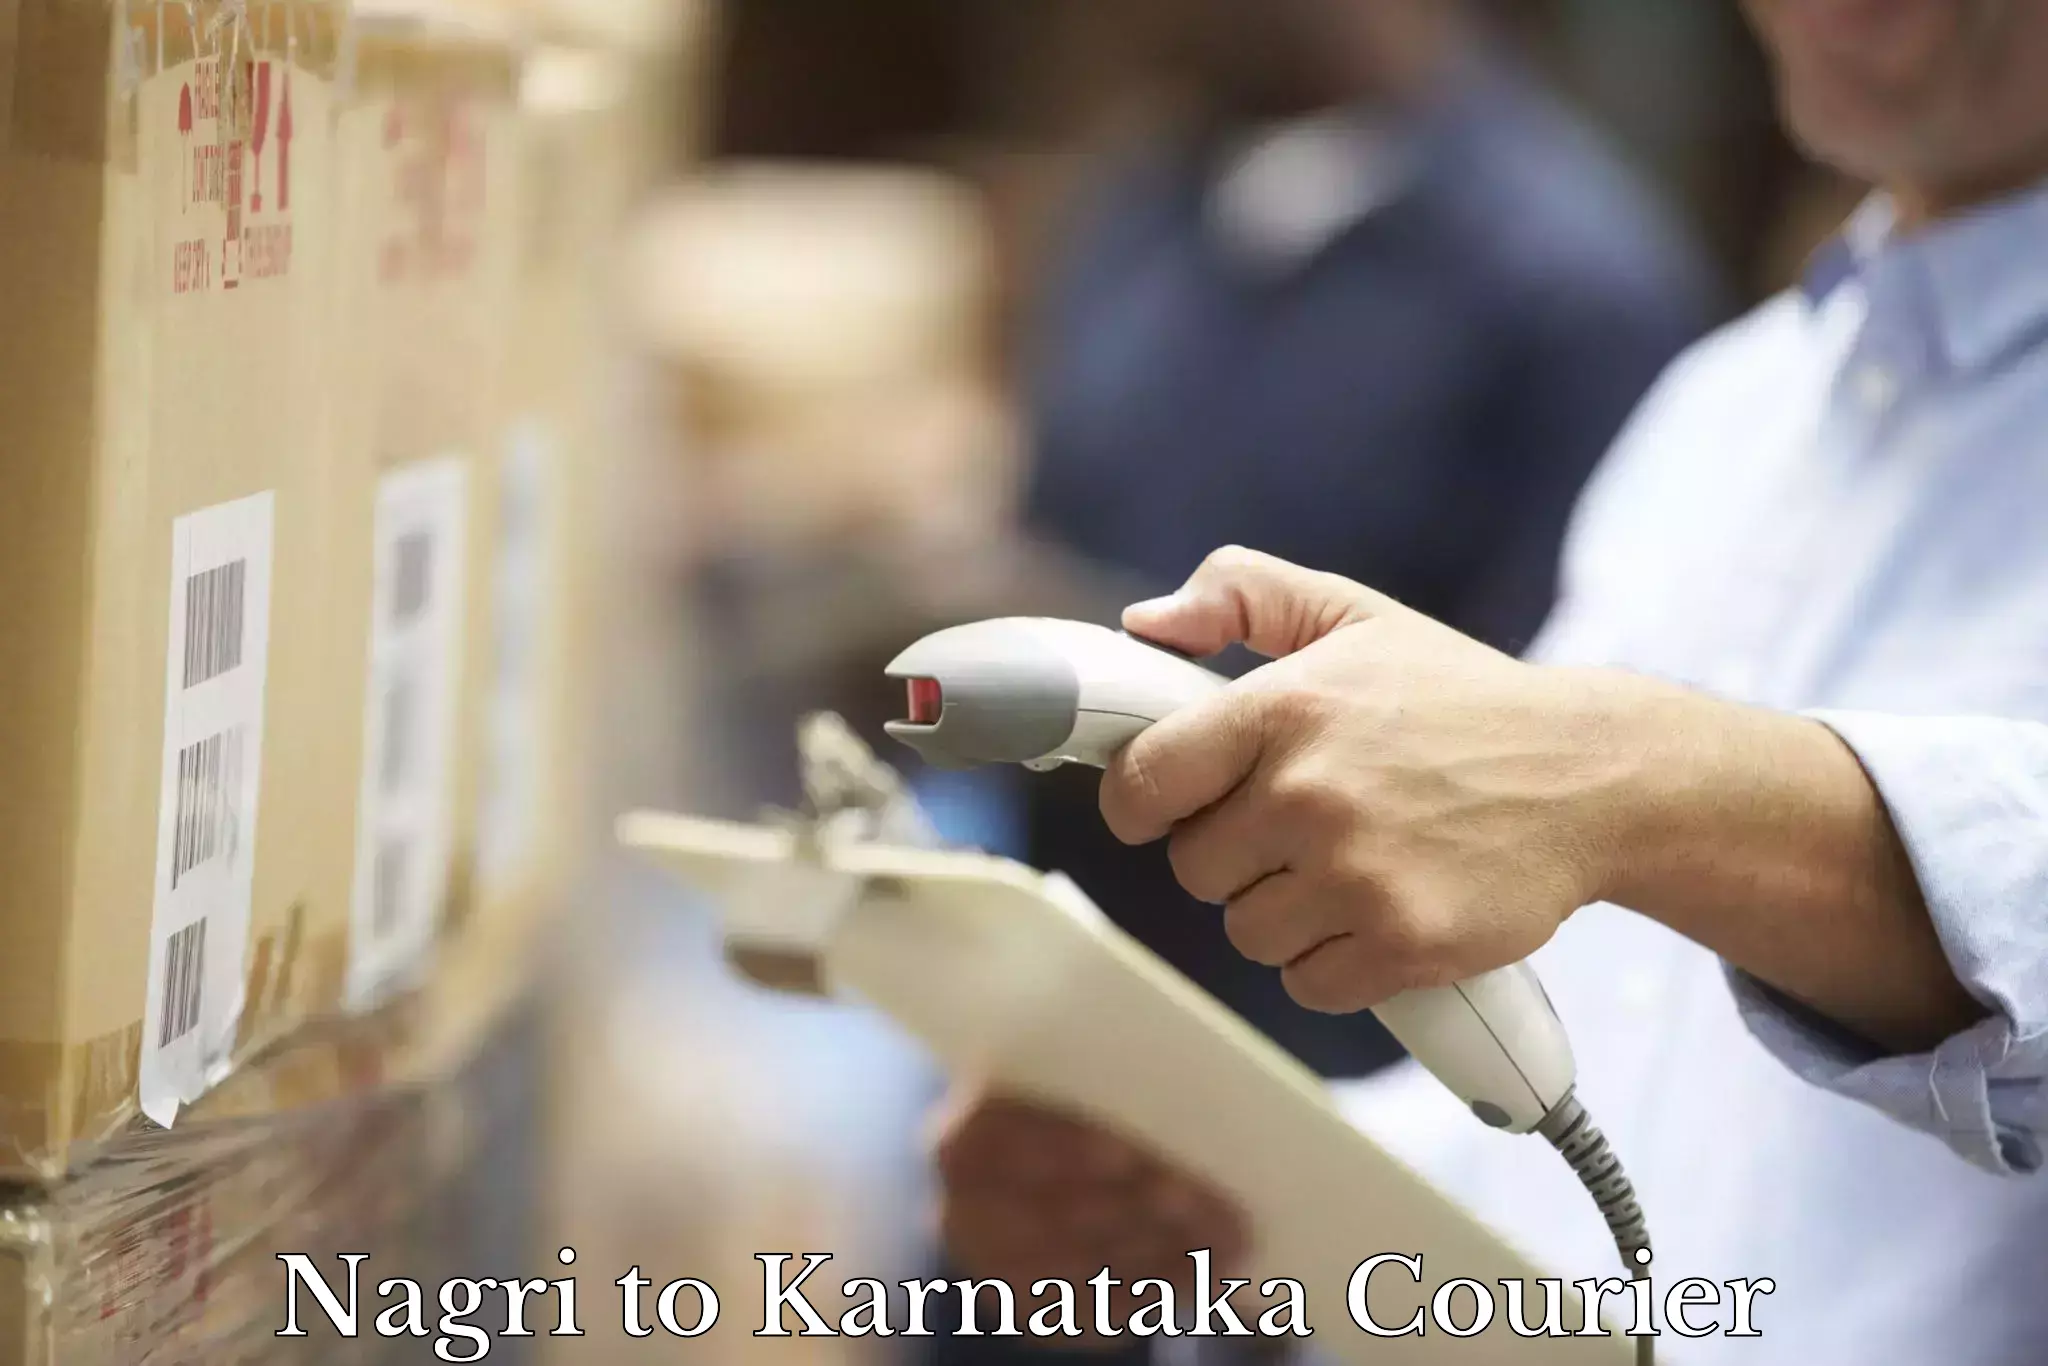 Next-day delivery options Nagri to Karnataka